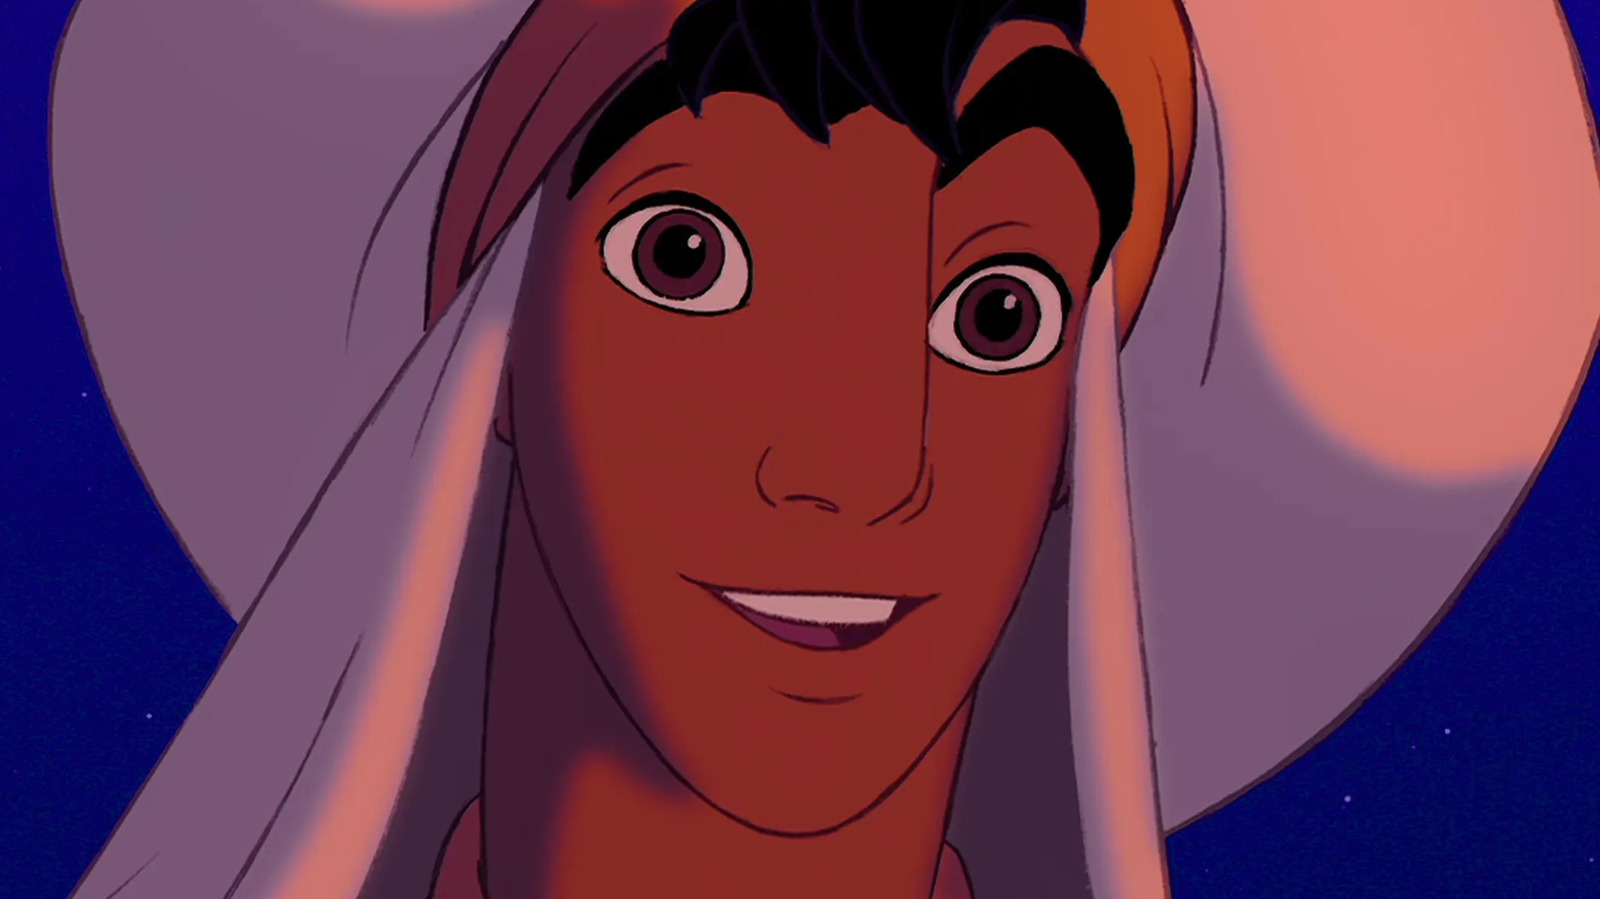 Scott Weinger, voice of 'Aladdin,' looks back on favorite moments